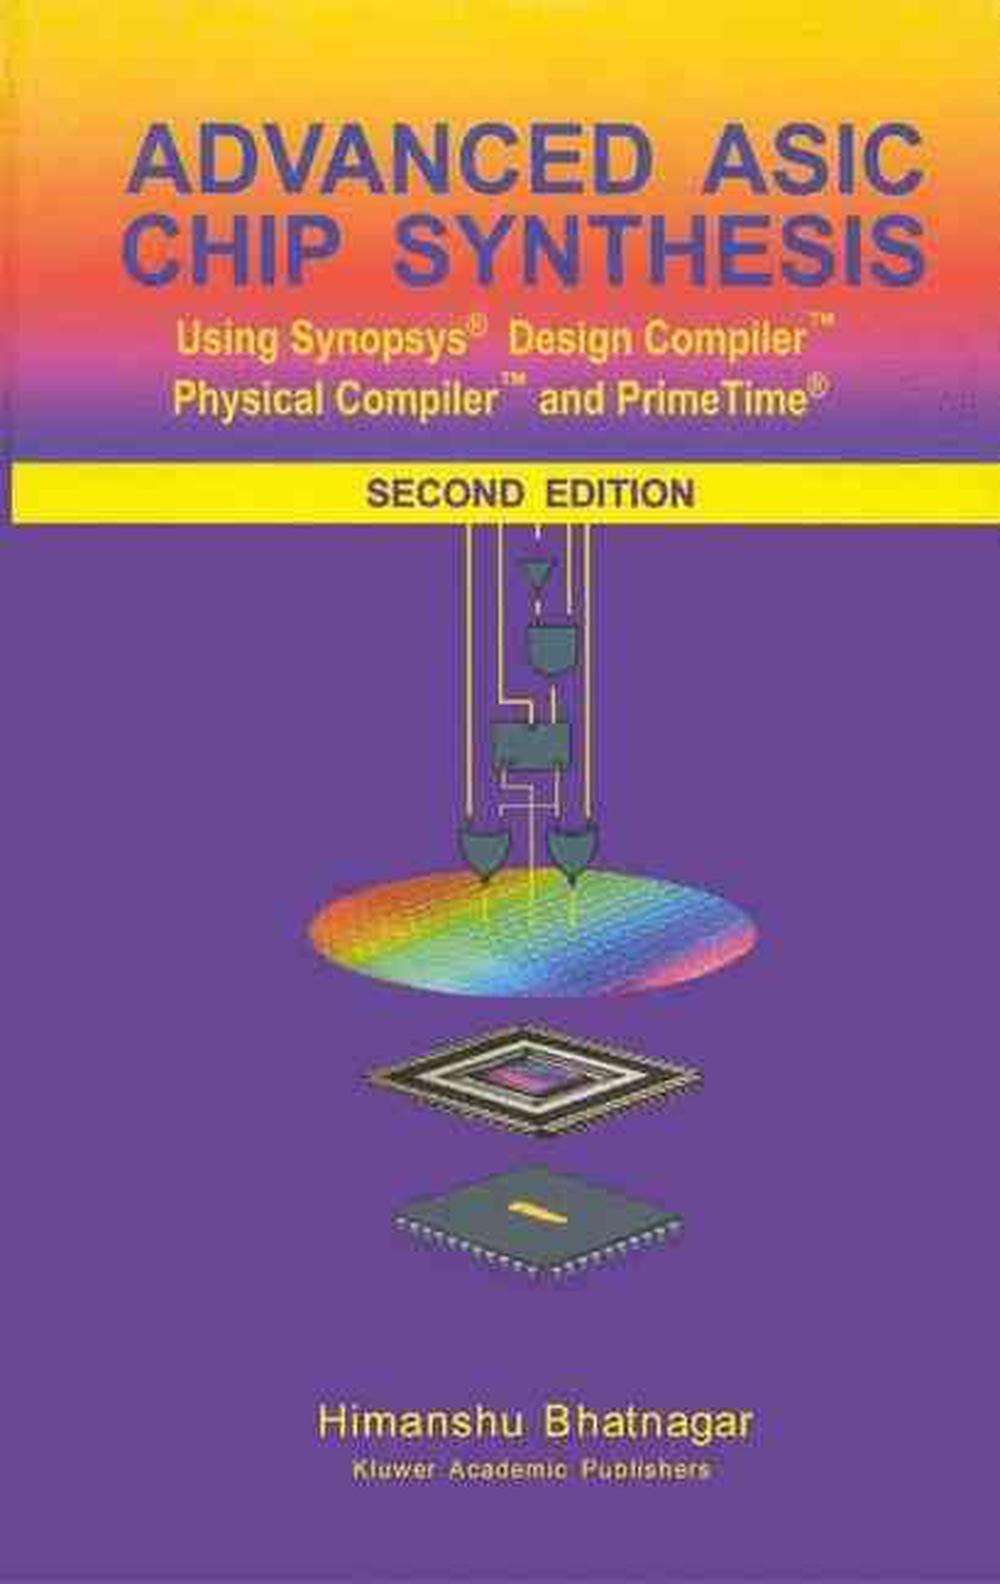 synopsys design compiler